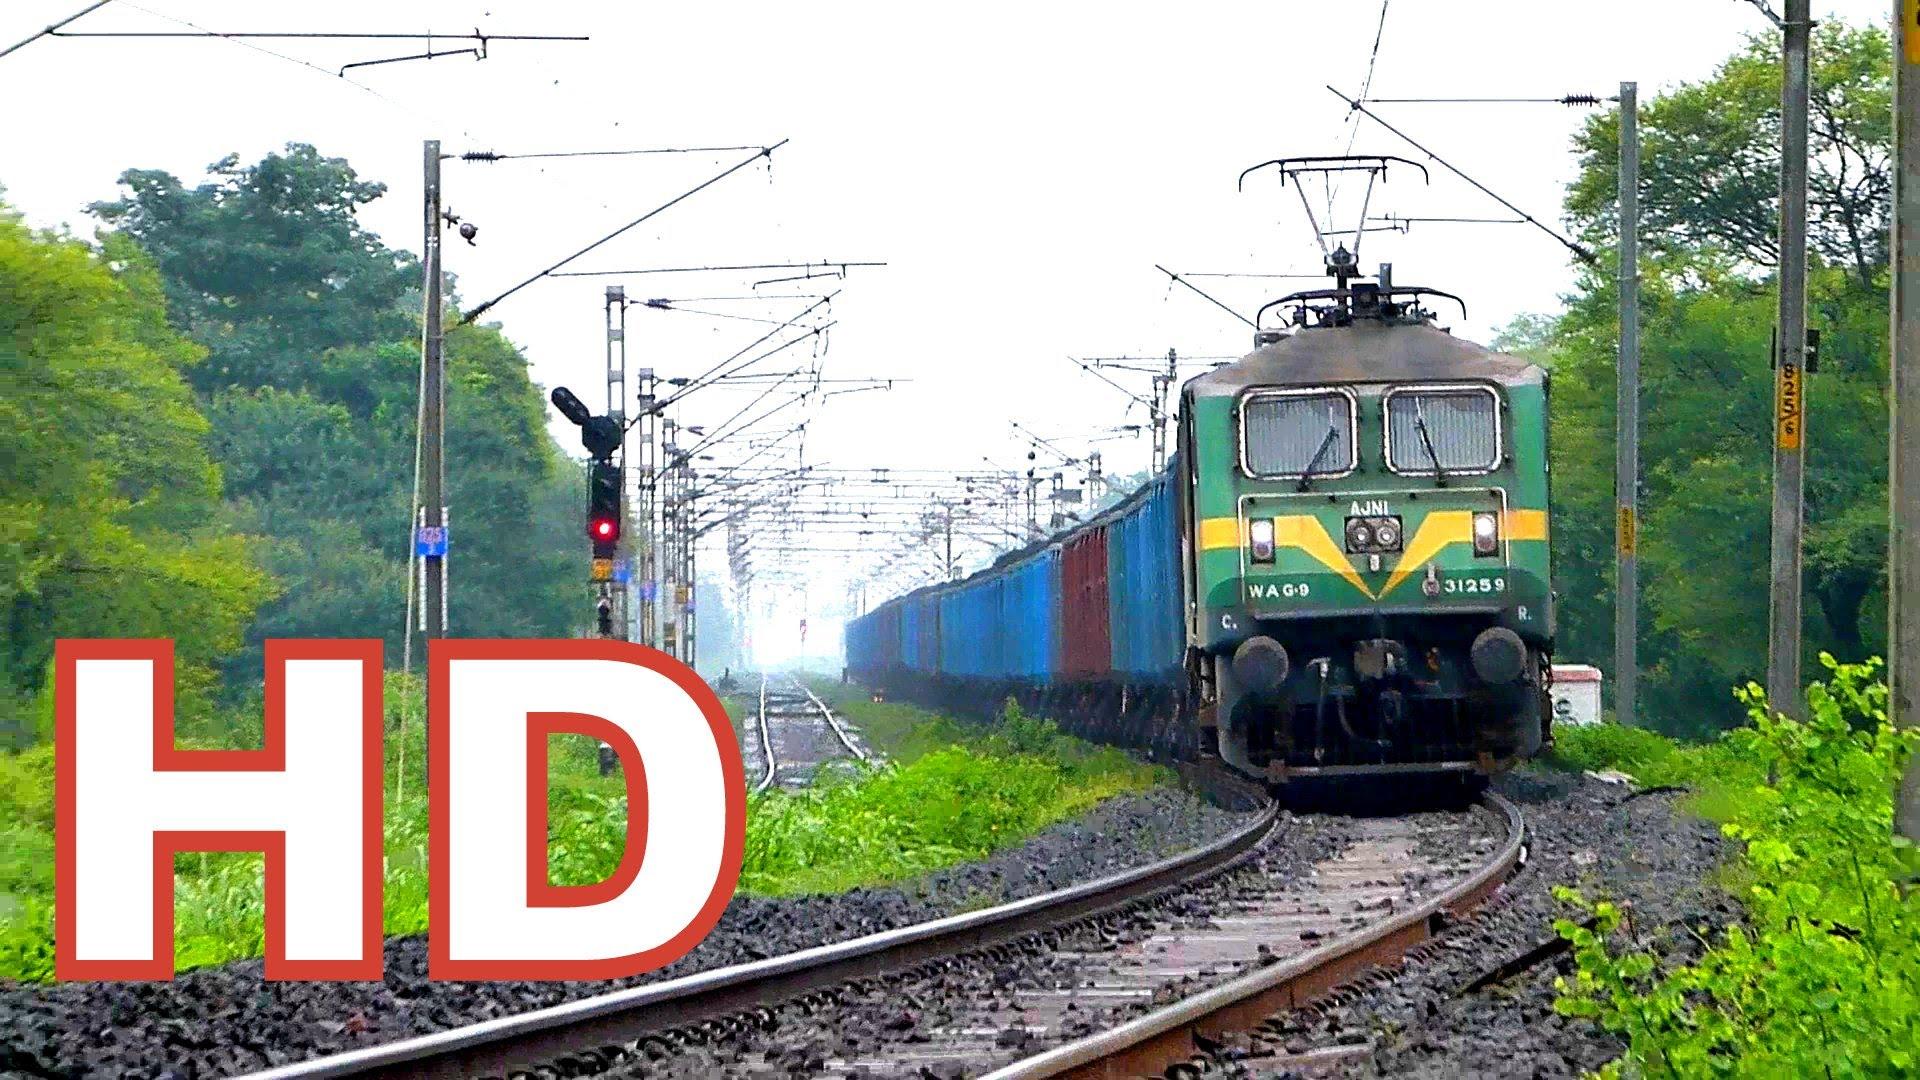 120 Best Train wallpaper ideas | train wallpaper, train, indian railways